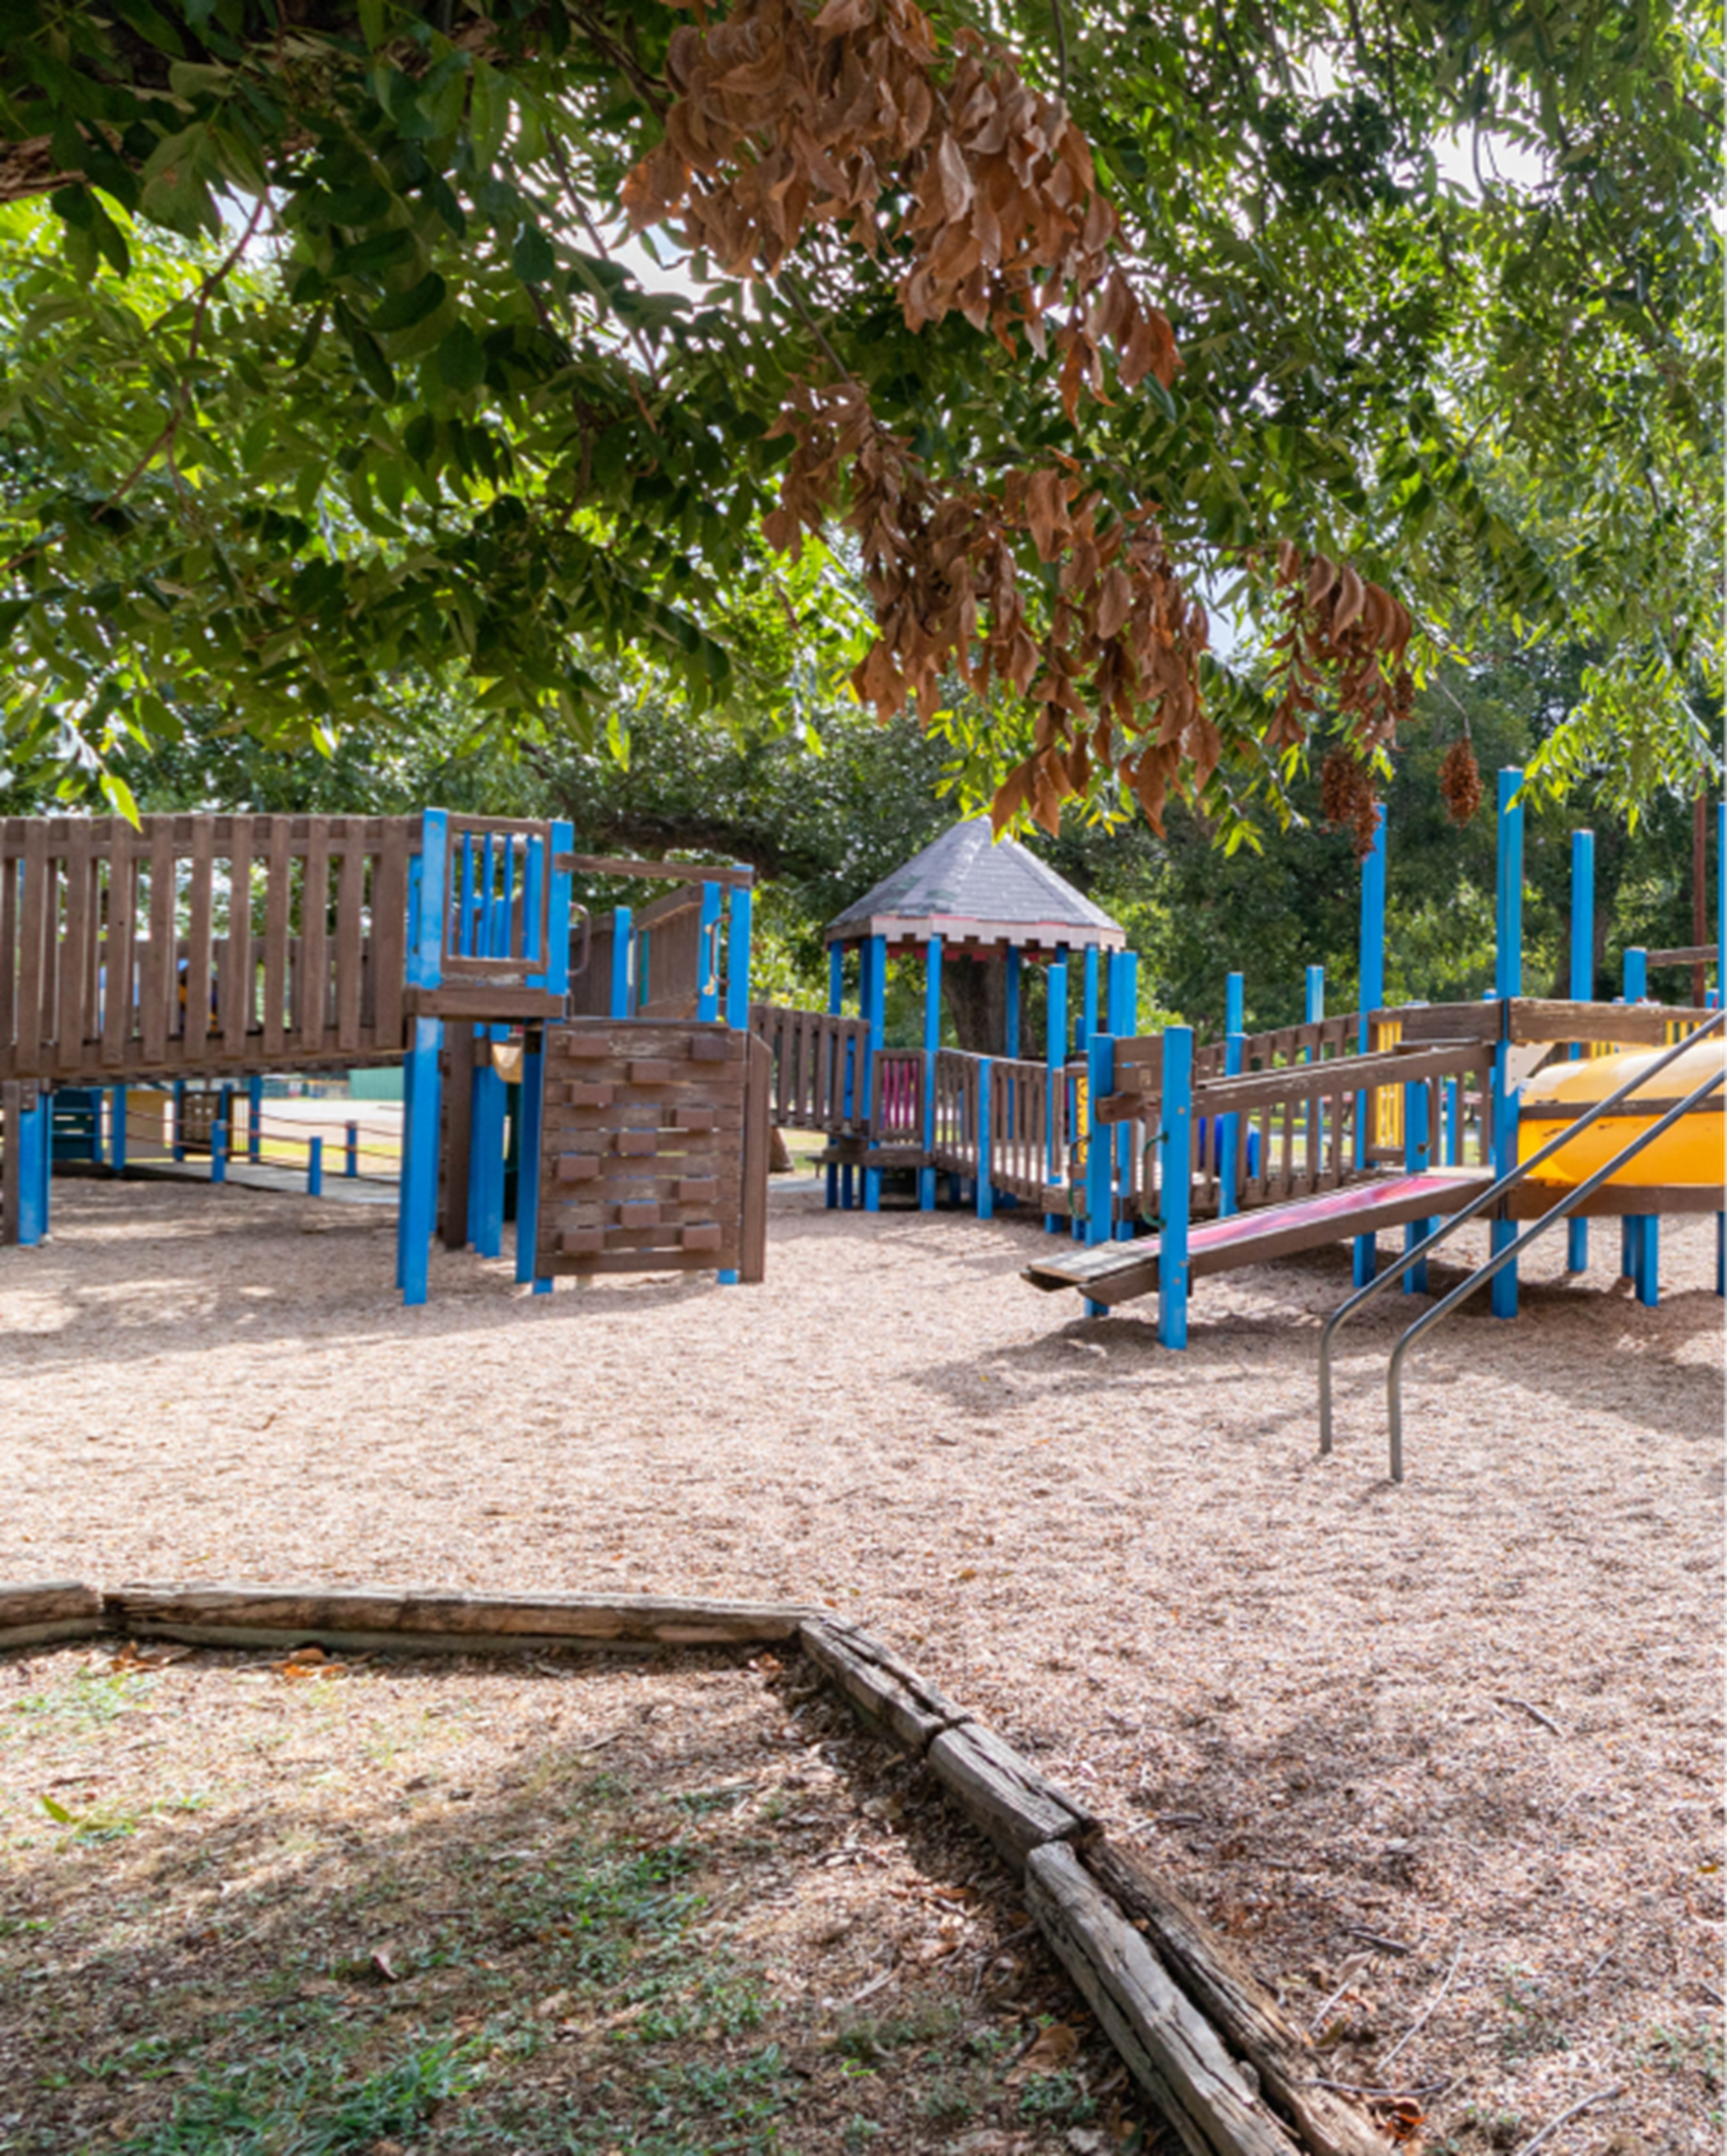 Park with playground